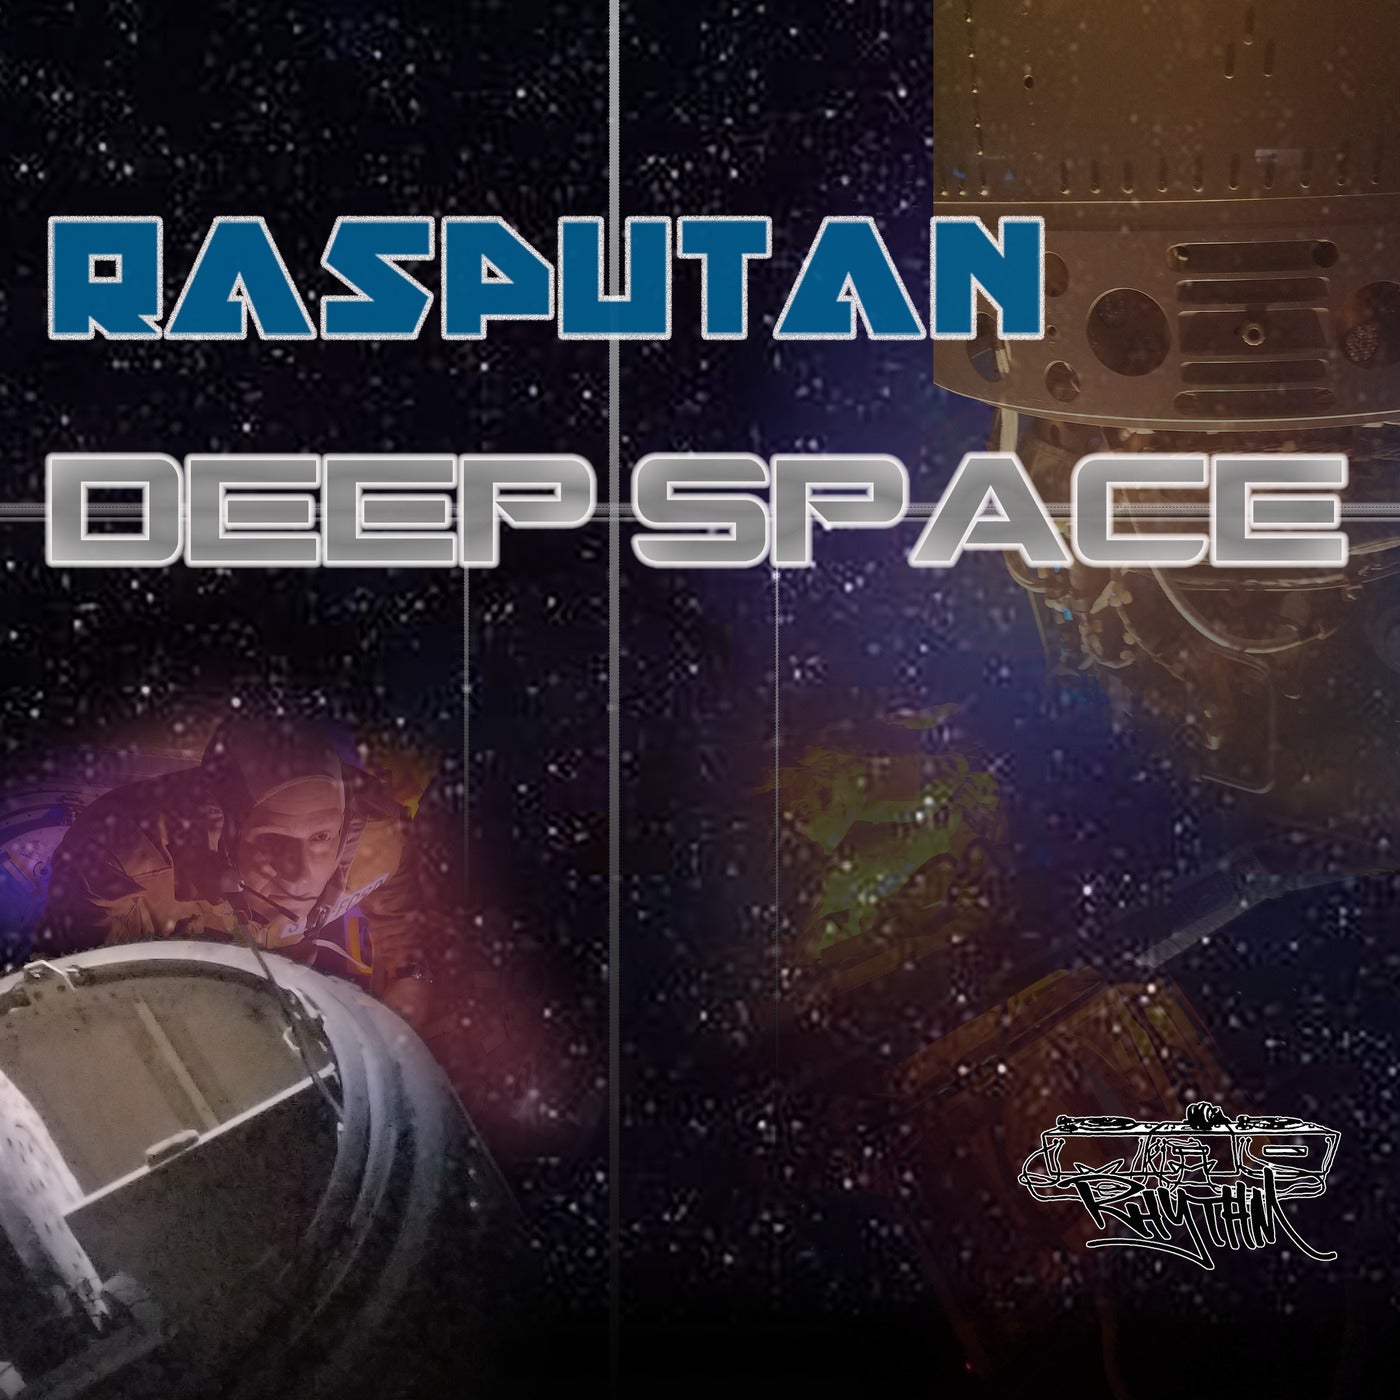 Deep Space EP